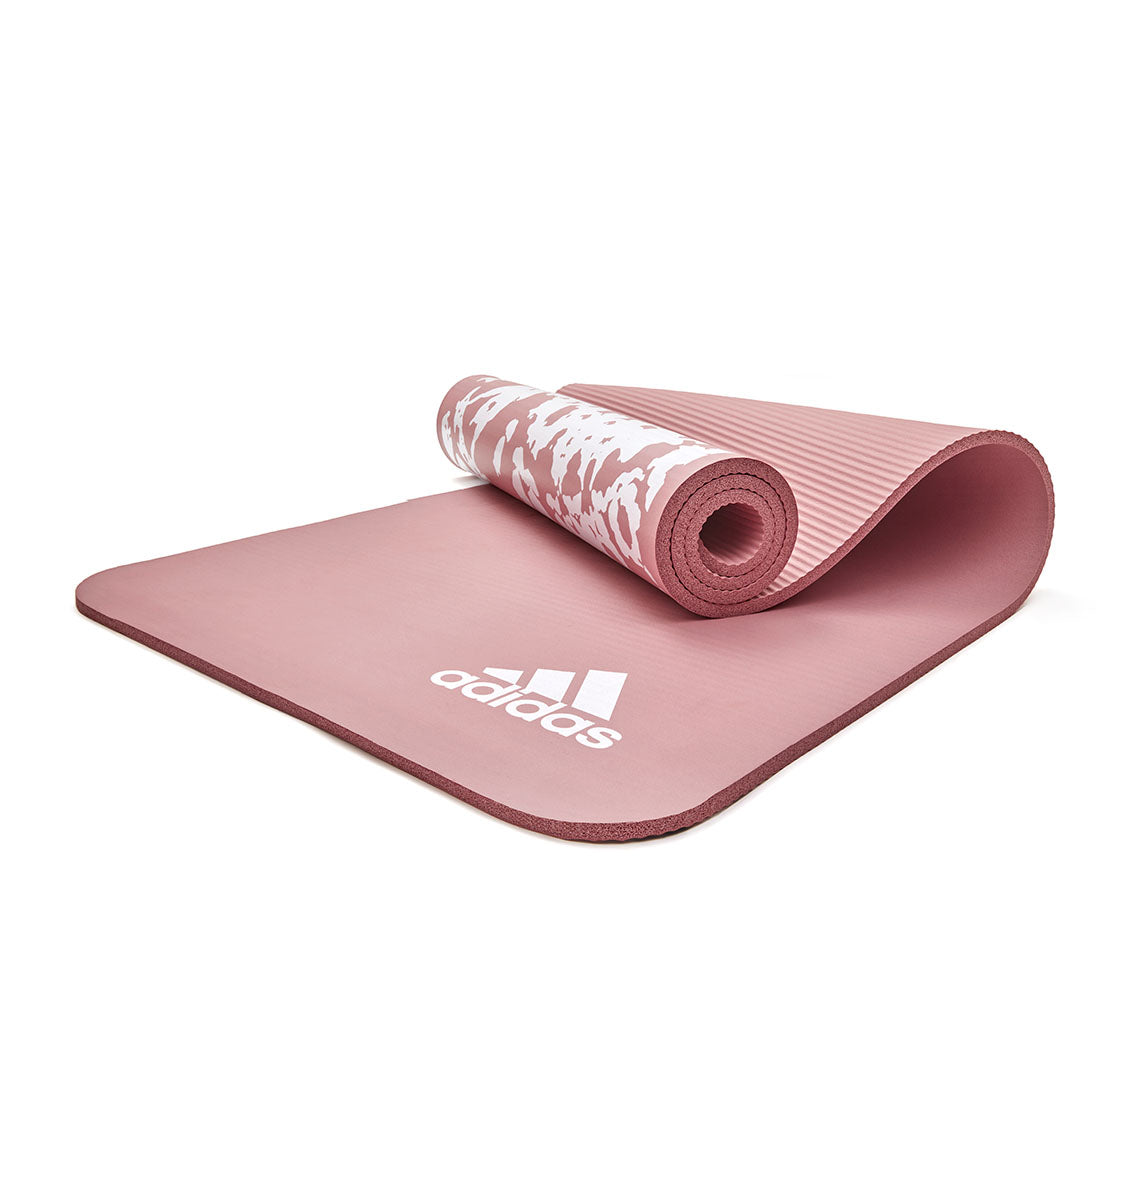 Blogilates Premium Yoga Mat - (6mm)  Yoga mats design, Yoga mat, Blogilates